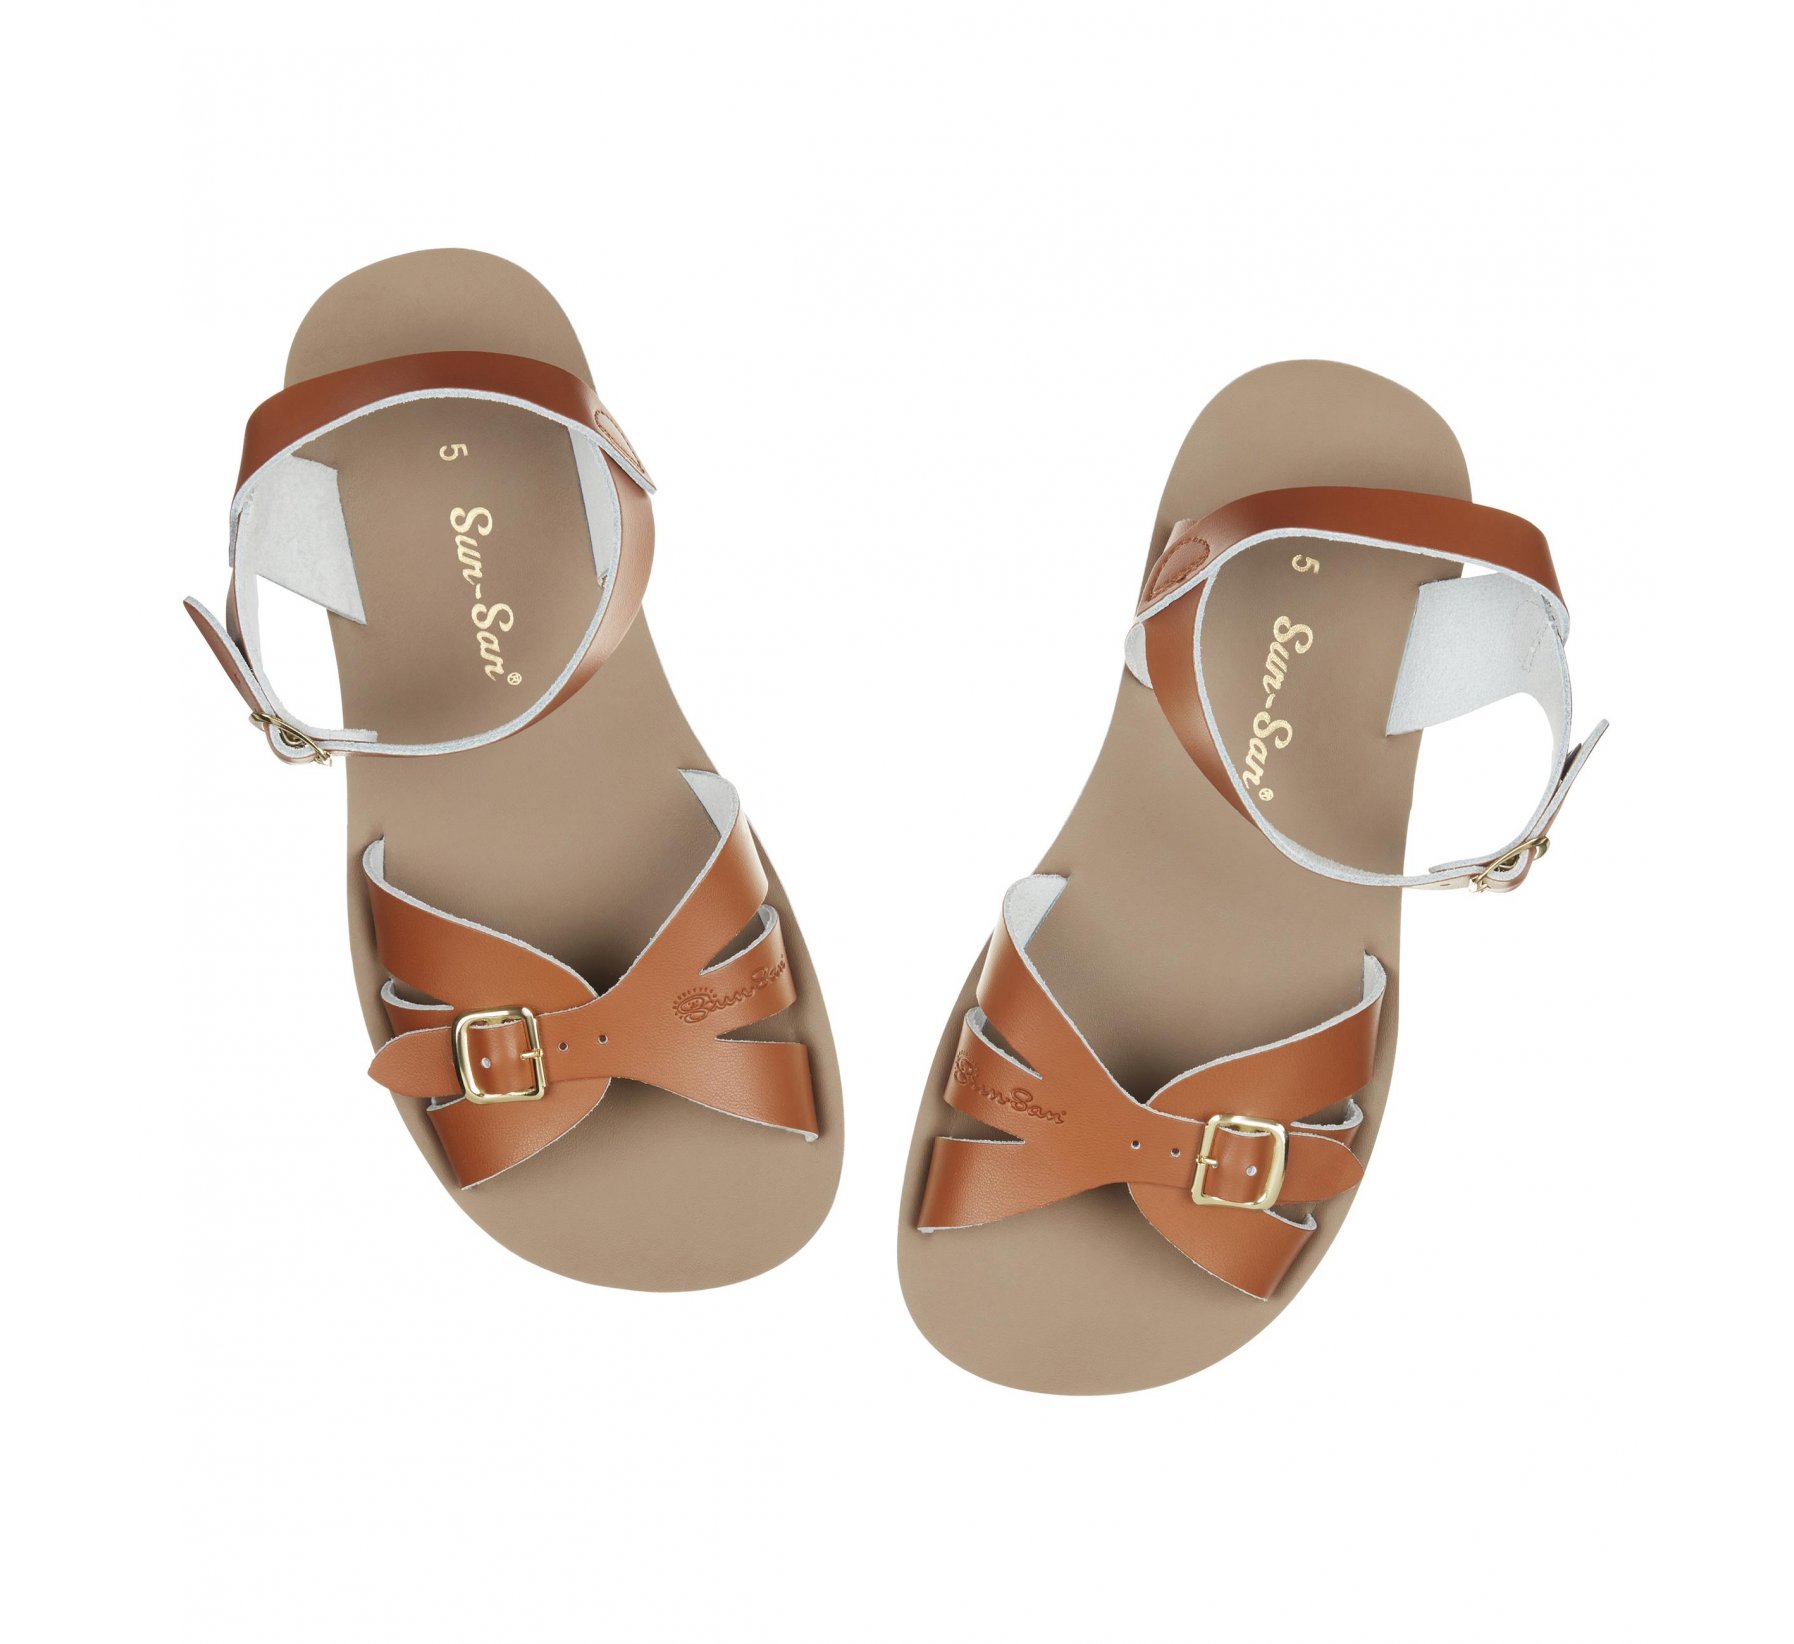 Boardwalk Tan Sandal - Salt Water Sandals